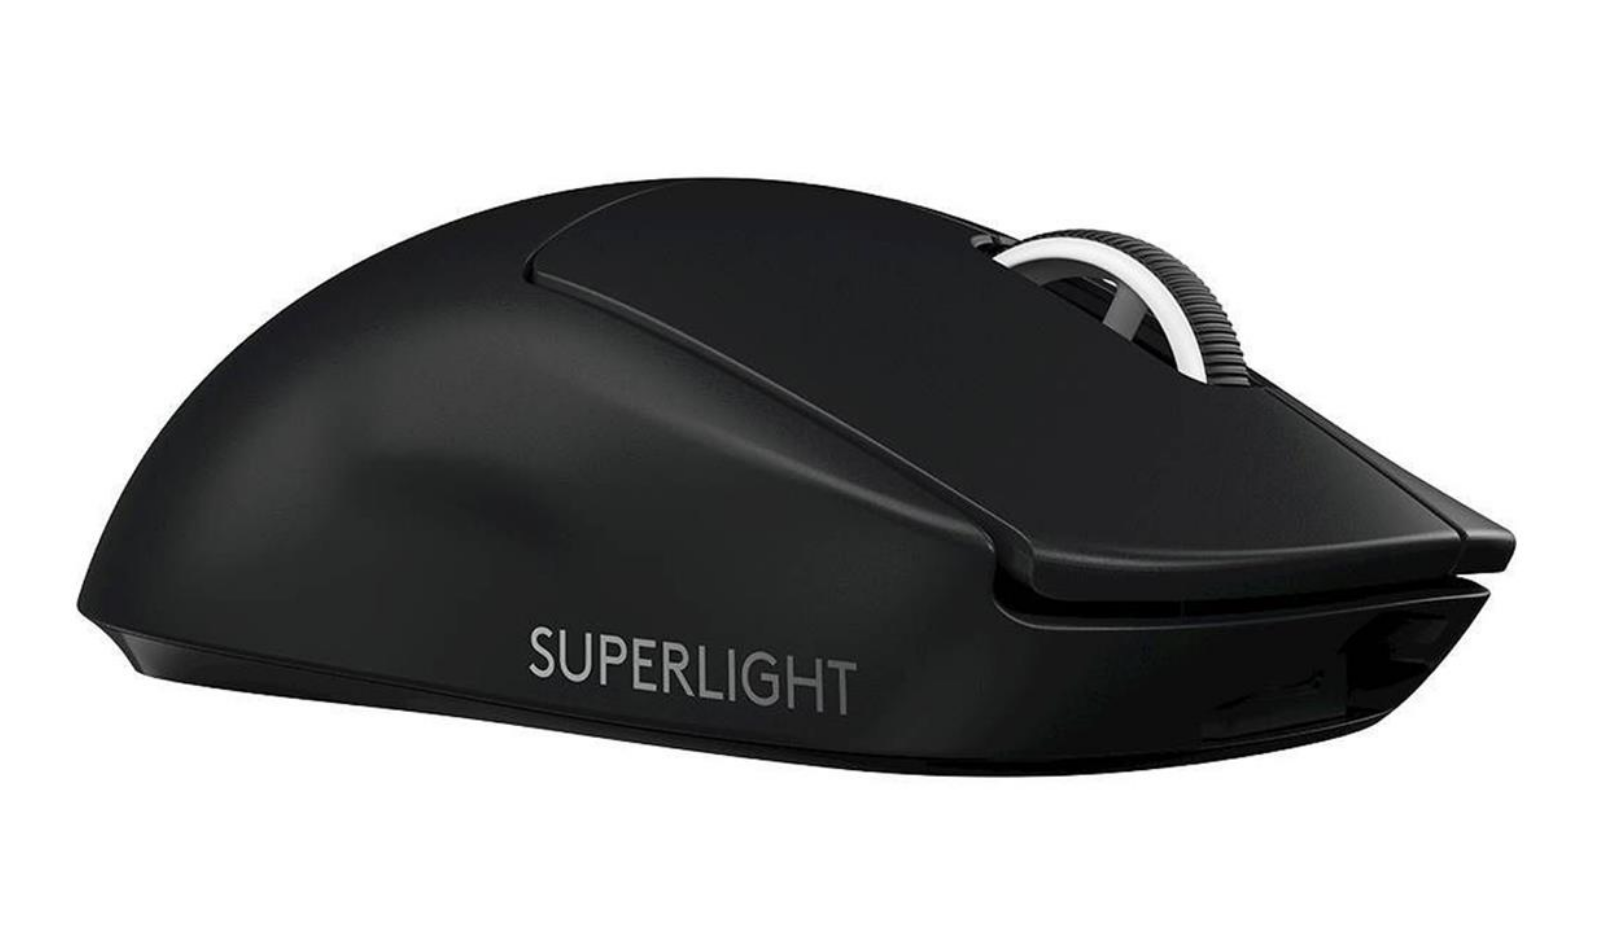 Logitech G Pro X Superlight Wireless Gaming Mouse with HERO sensor (black) $110 + Free Shipping